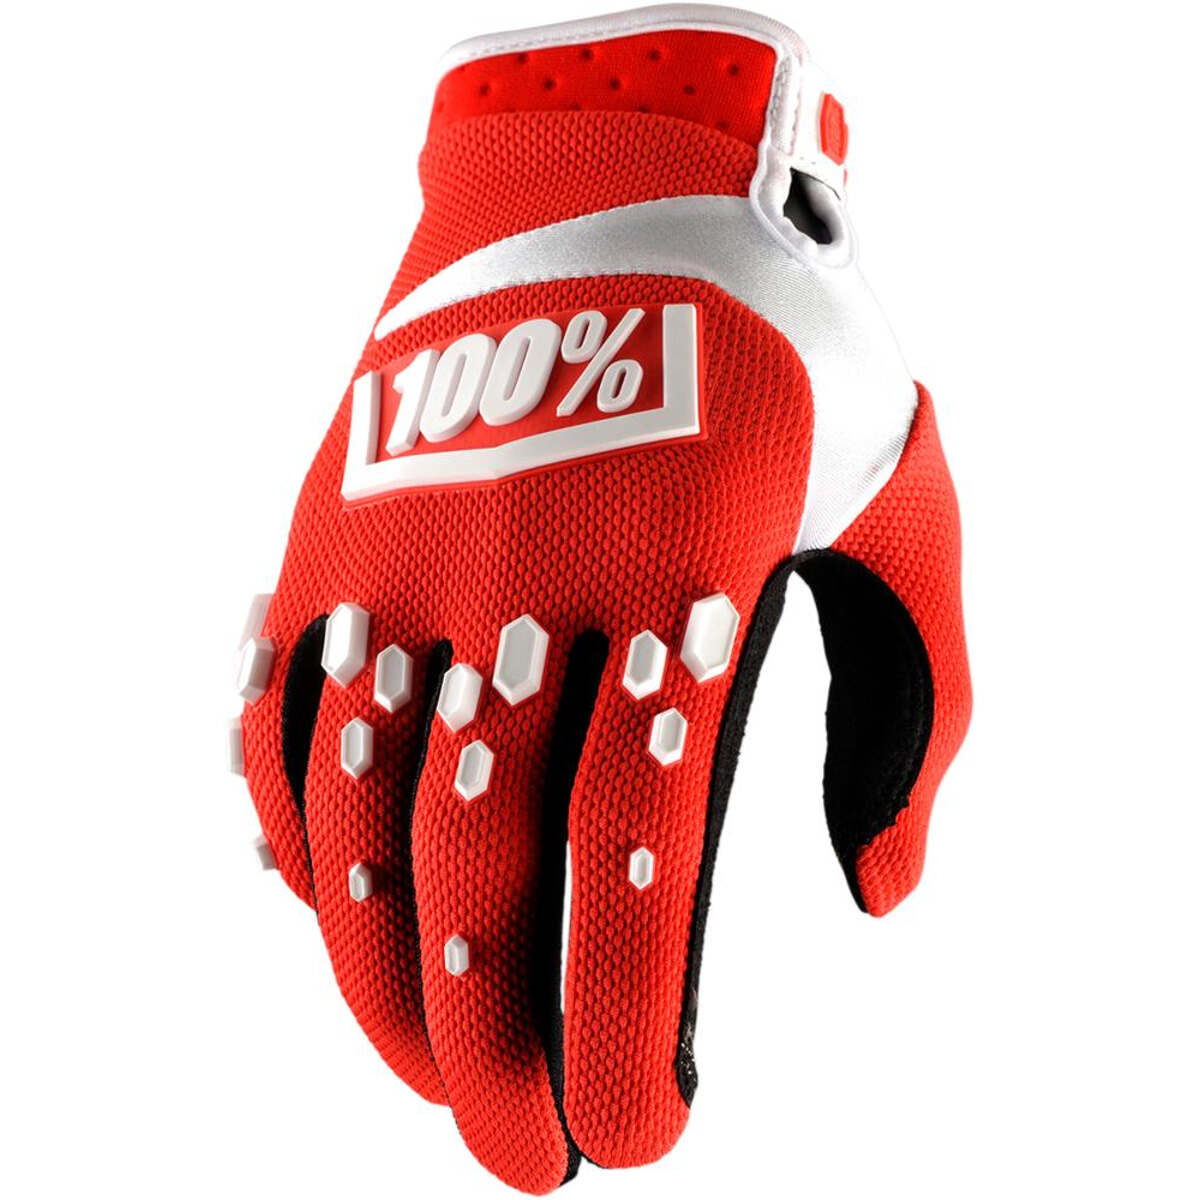 100% Bike Gloves Airmatic Red/White